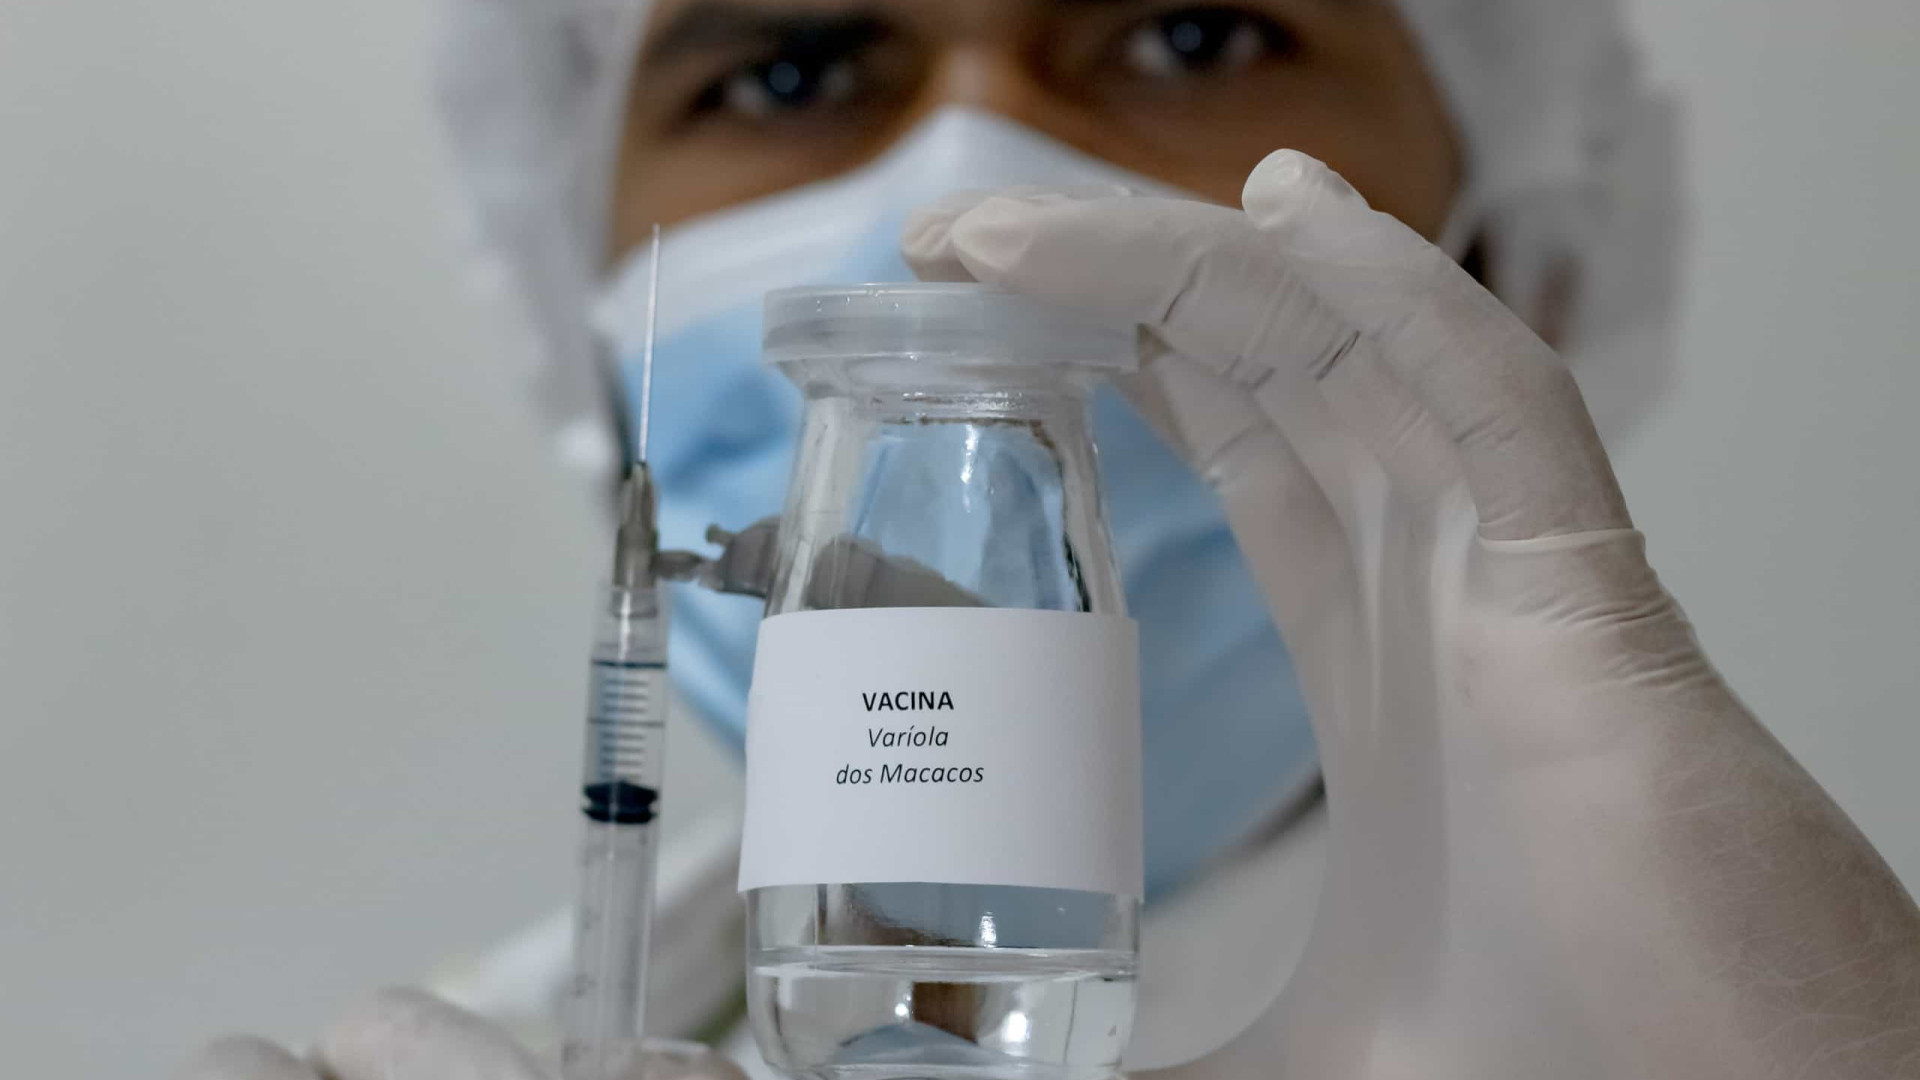 Vacina contra varíola dos macacos será adaptada às realidades do país